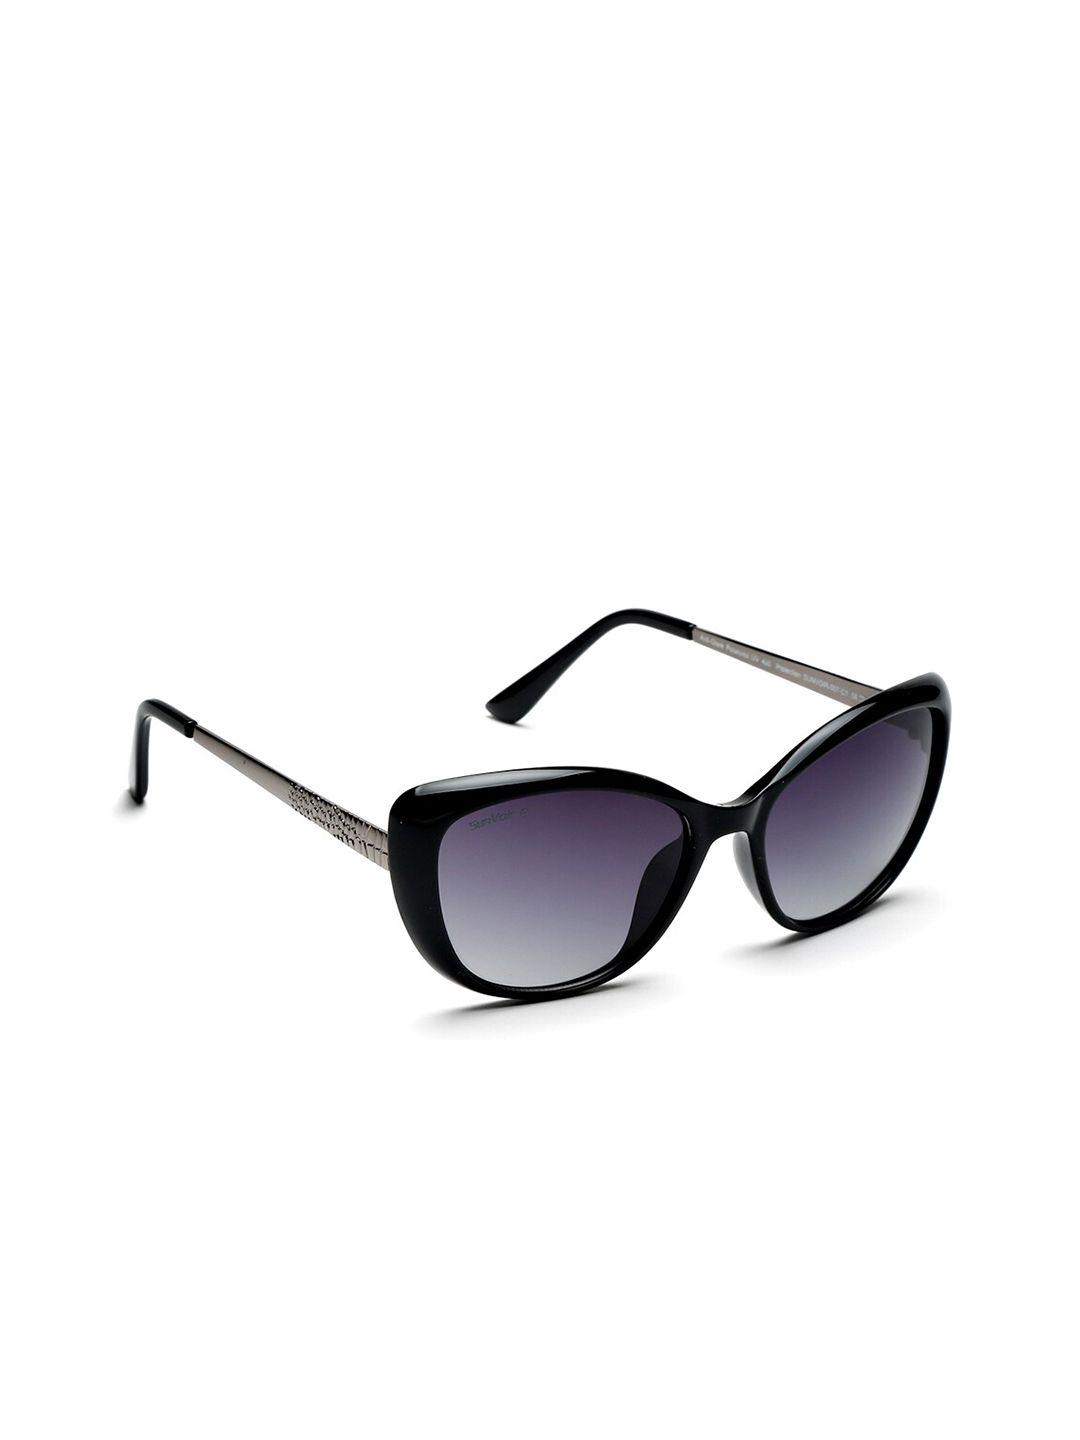 sunvoir women grey lens & black cateye sunglasses with polarised lens sunvoir-007-c1